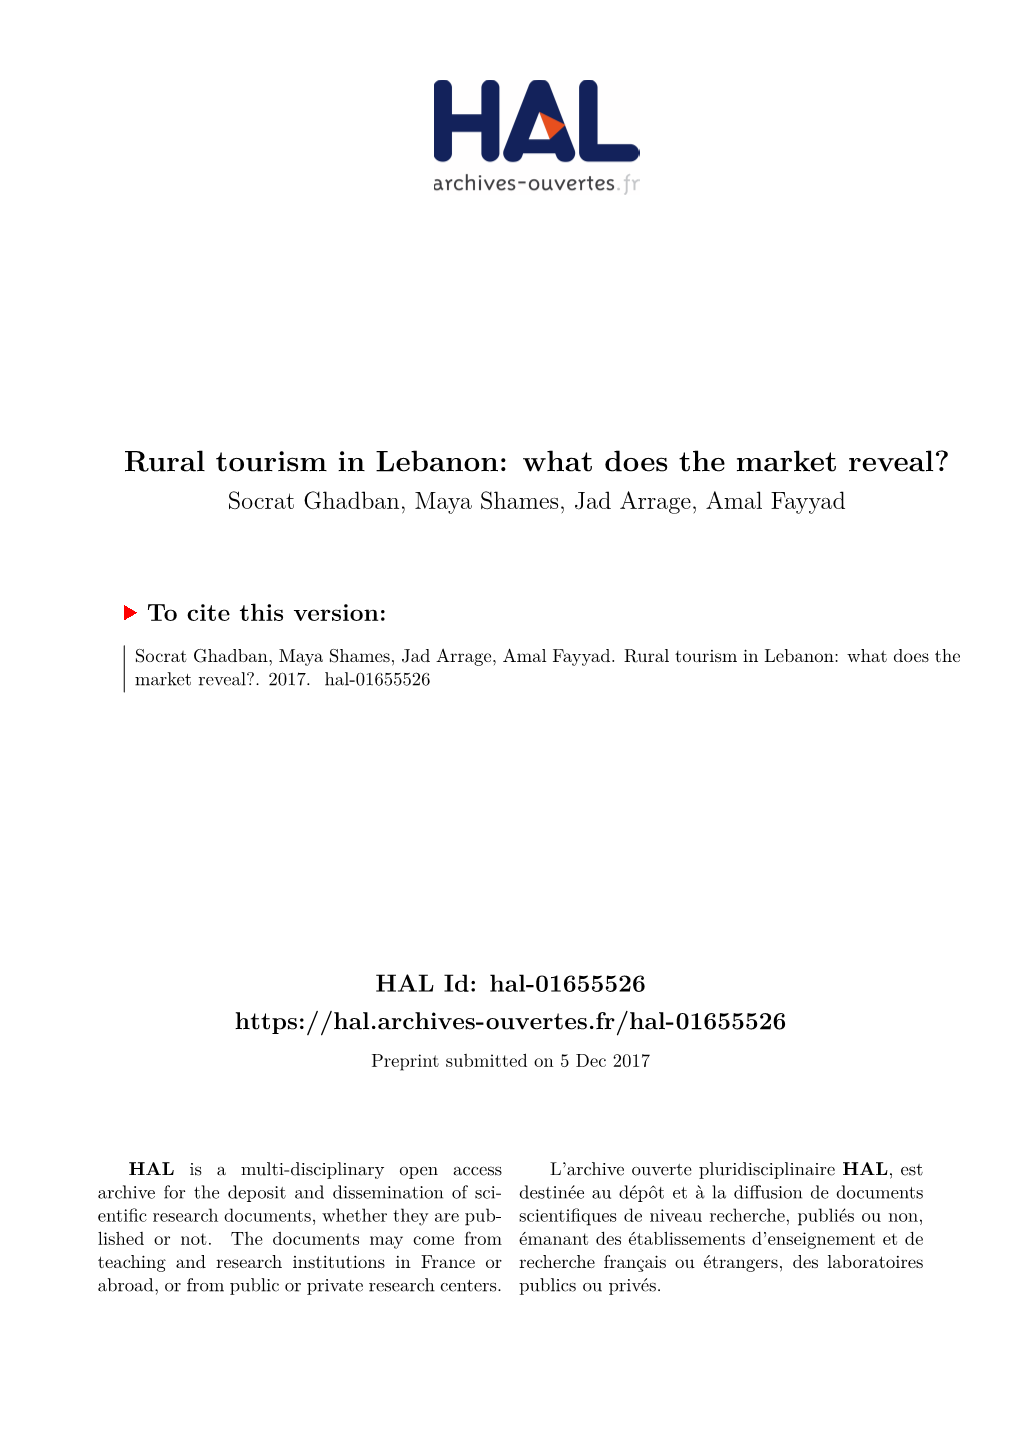 Rural Tourism in Lebanon: What Does the Market Reveal? Socrat Ghadban, Maya Shames, Jad Arrage, Amal Fayyad